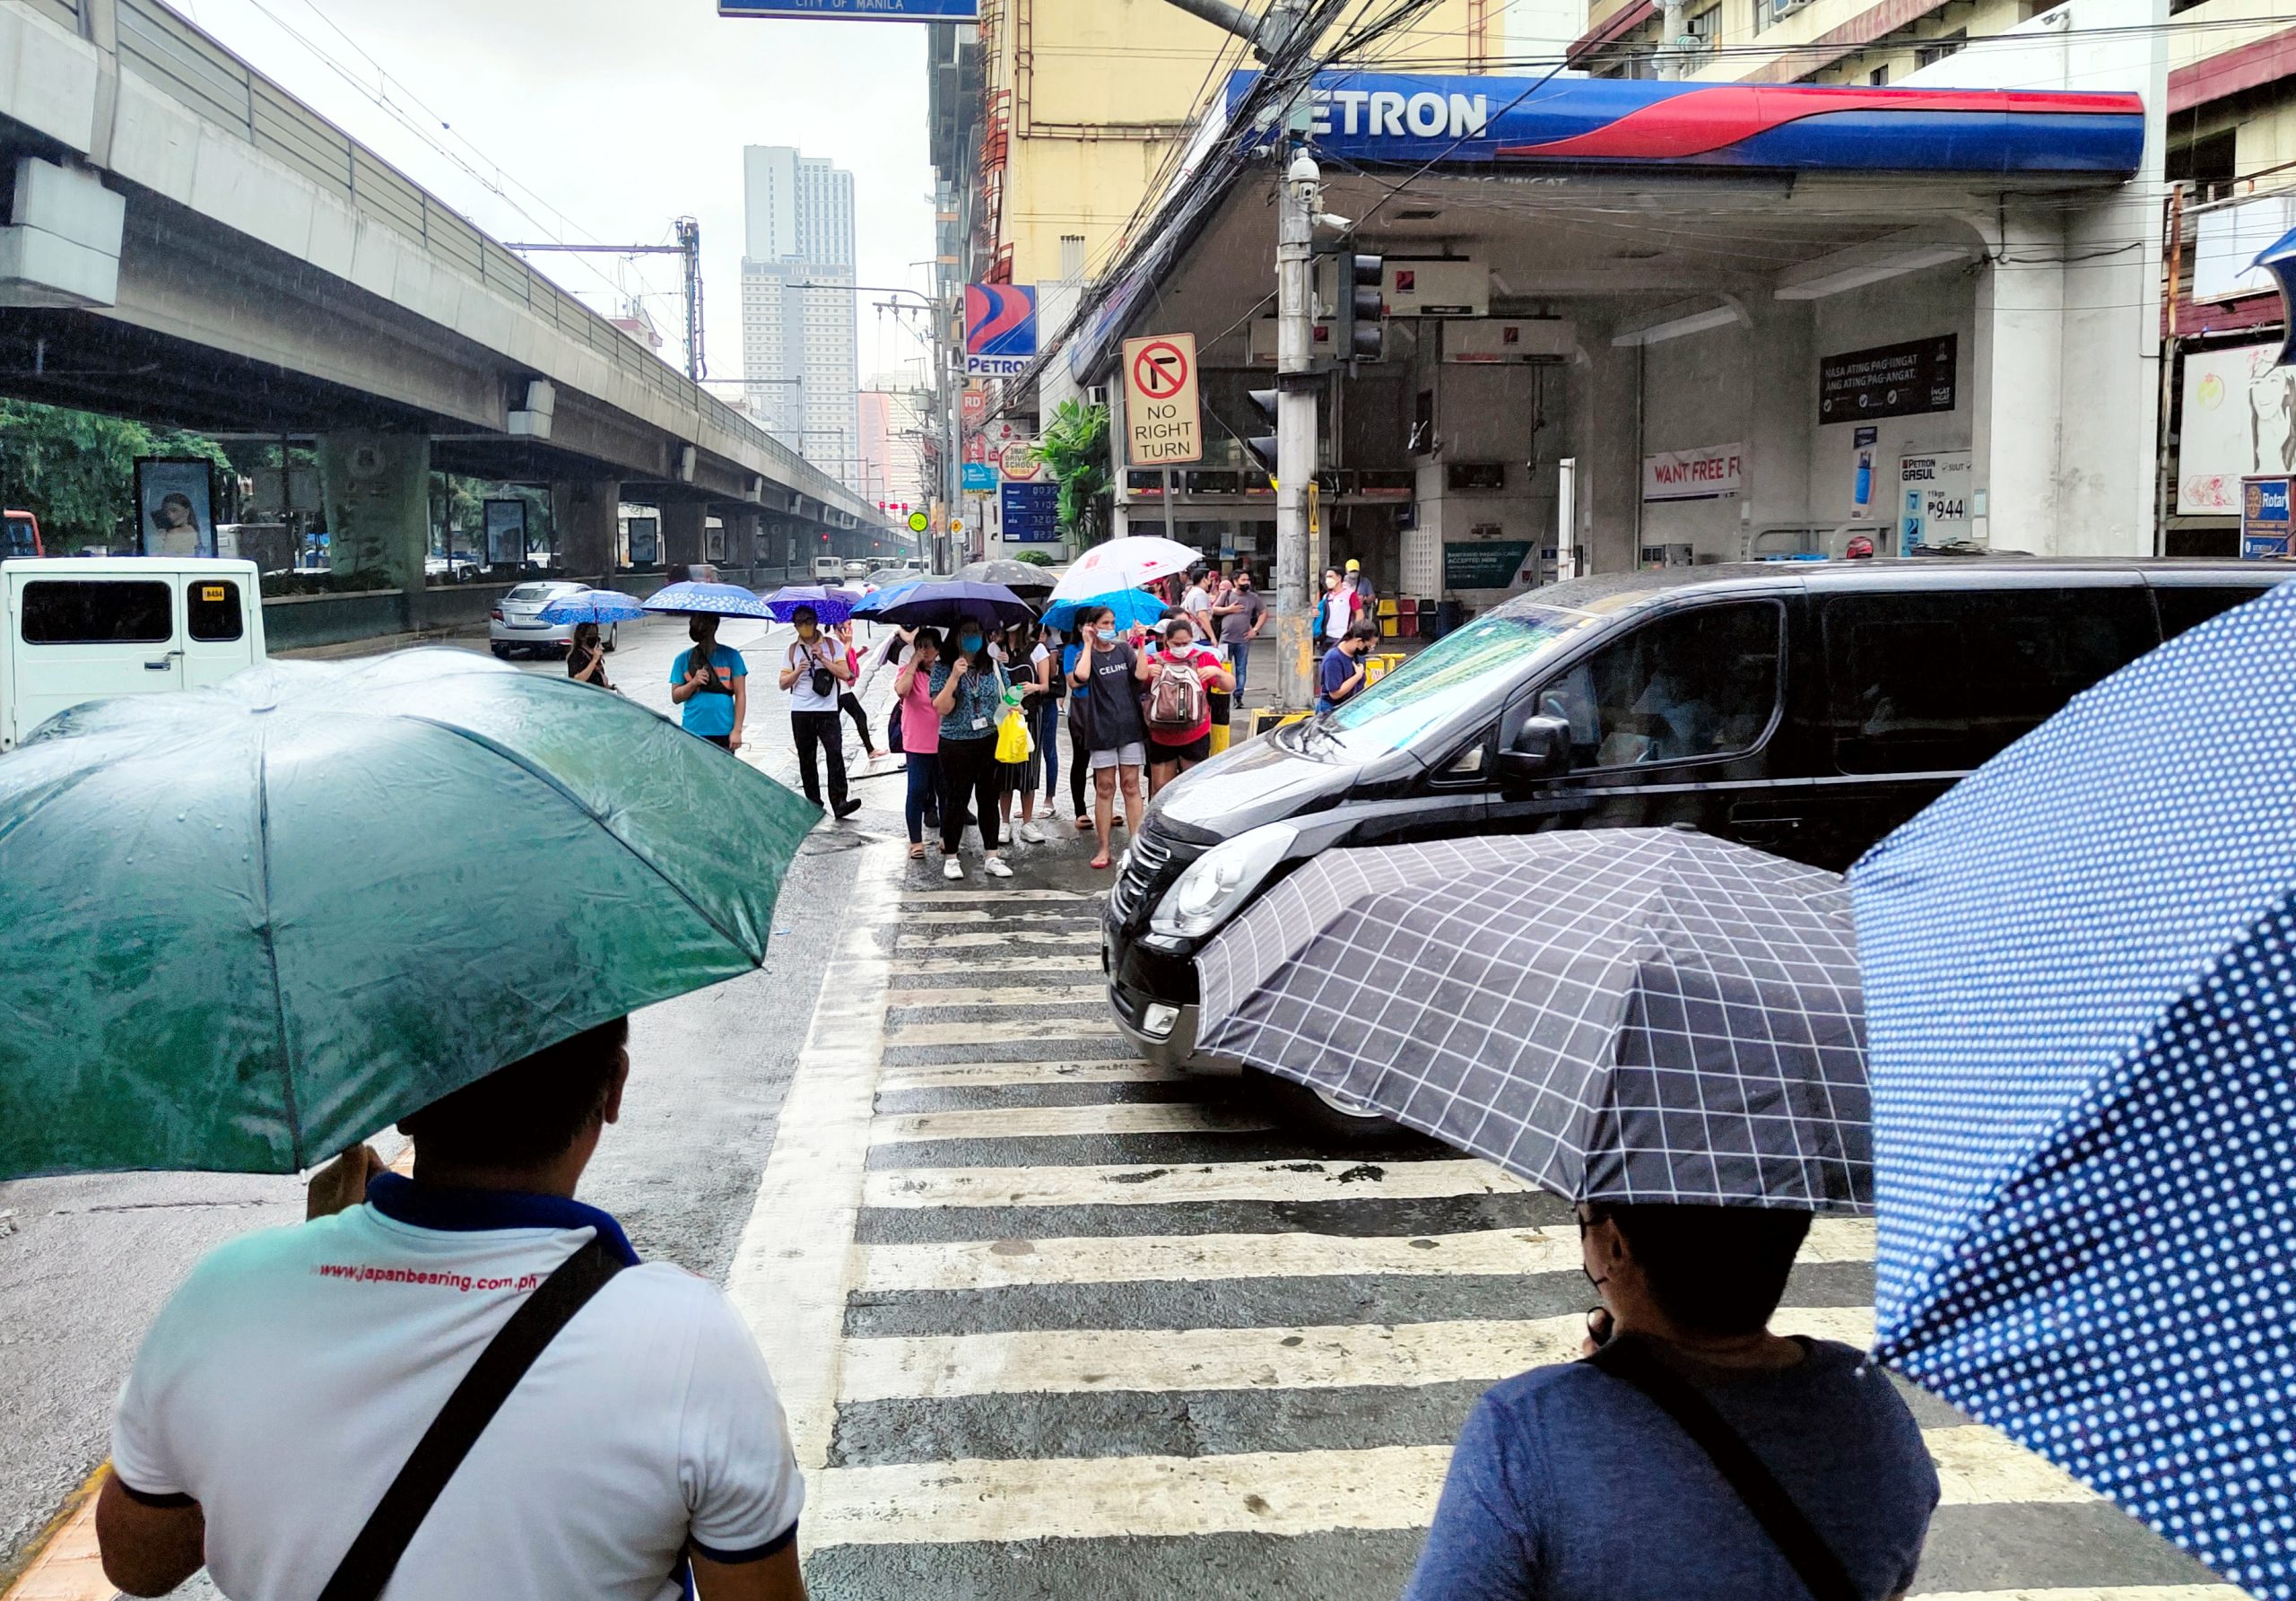 People using umbrellas